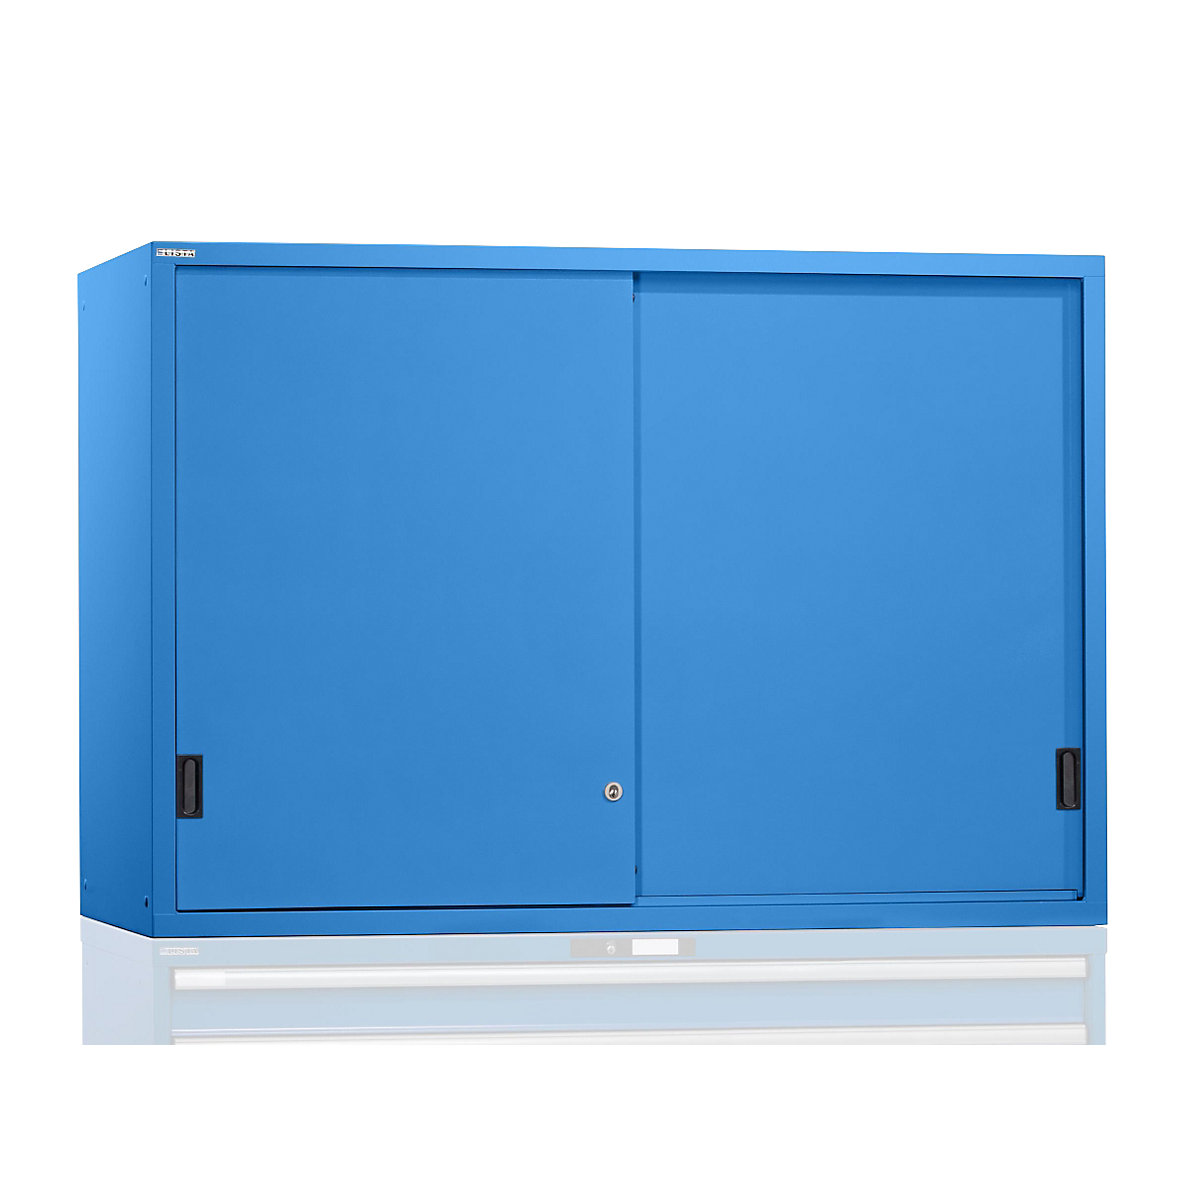 Altillo con puertas correderas – LISTA, puertas de chapa maciza, H x A x P 1000 x 1023 x 725 mm, azul luminoso-14